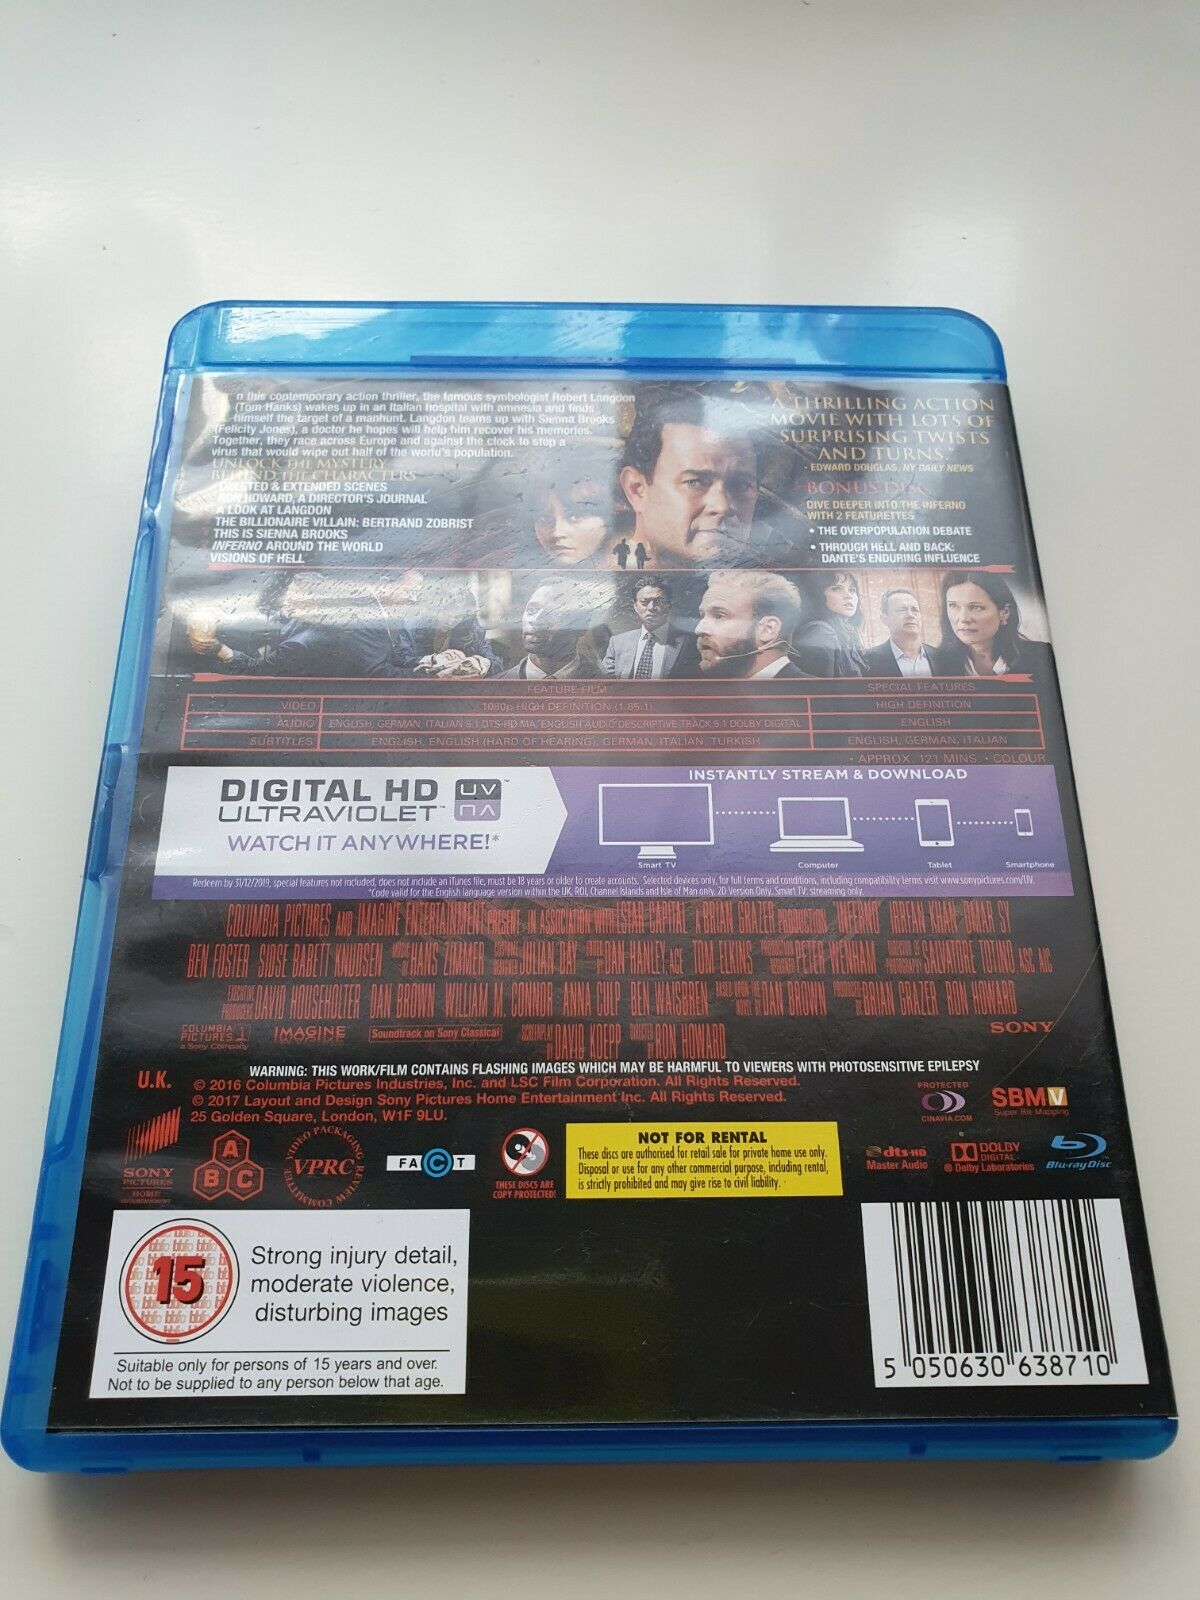 5050630638710 Inferno Blu-ray + bonus + Digital UV 2017 T. Hanks, F. Jones, B. Foster 2017